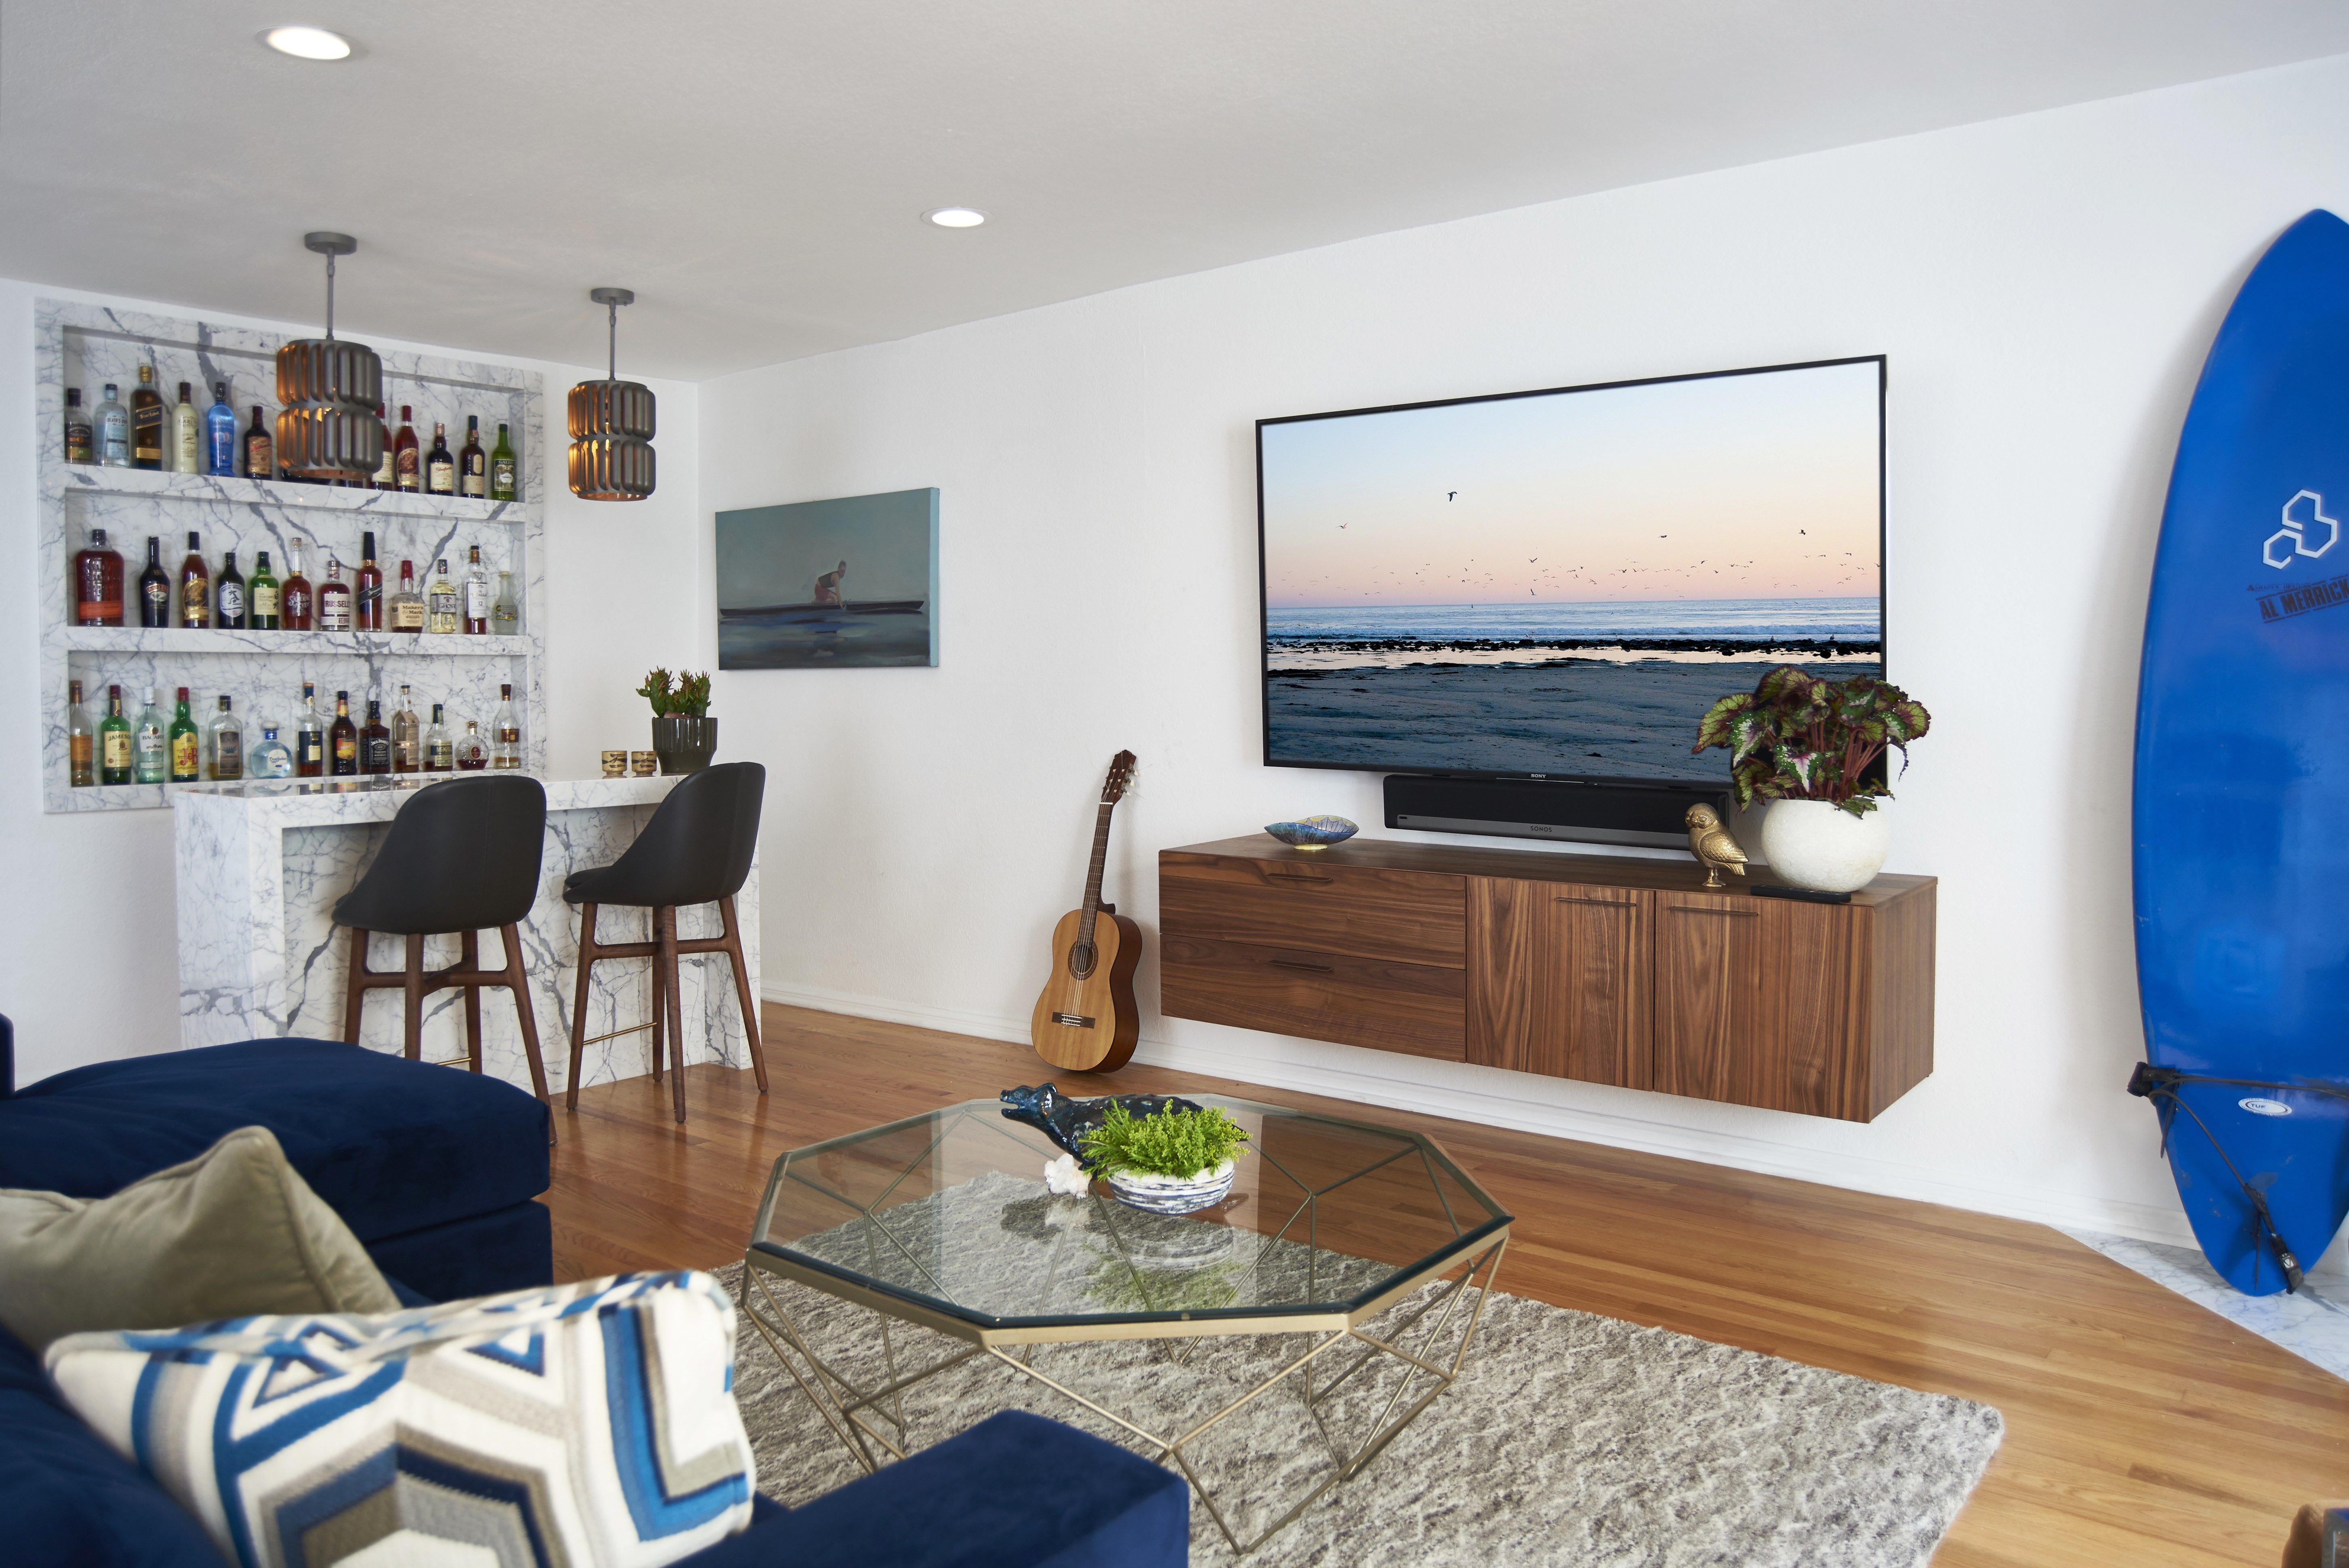 Living Room With Mini Bar Design Off 55, Modern Mini Bar Designs For Living Room